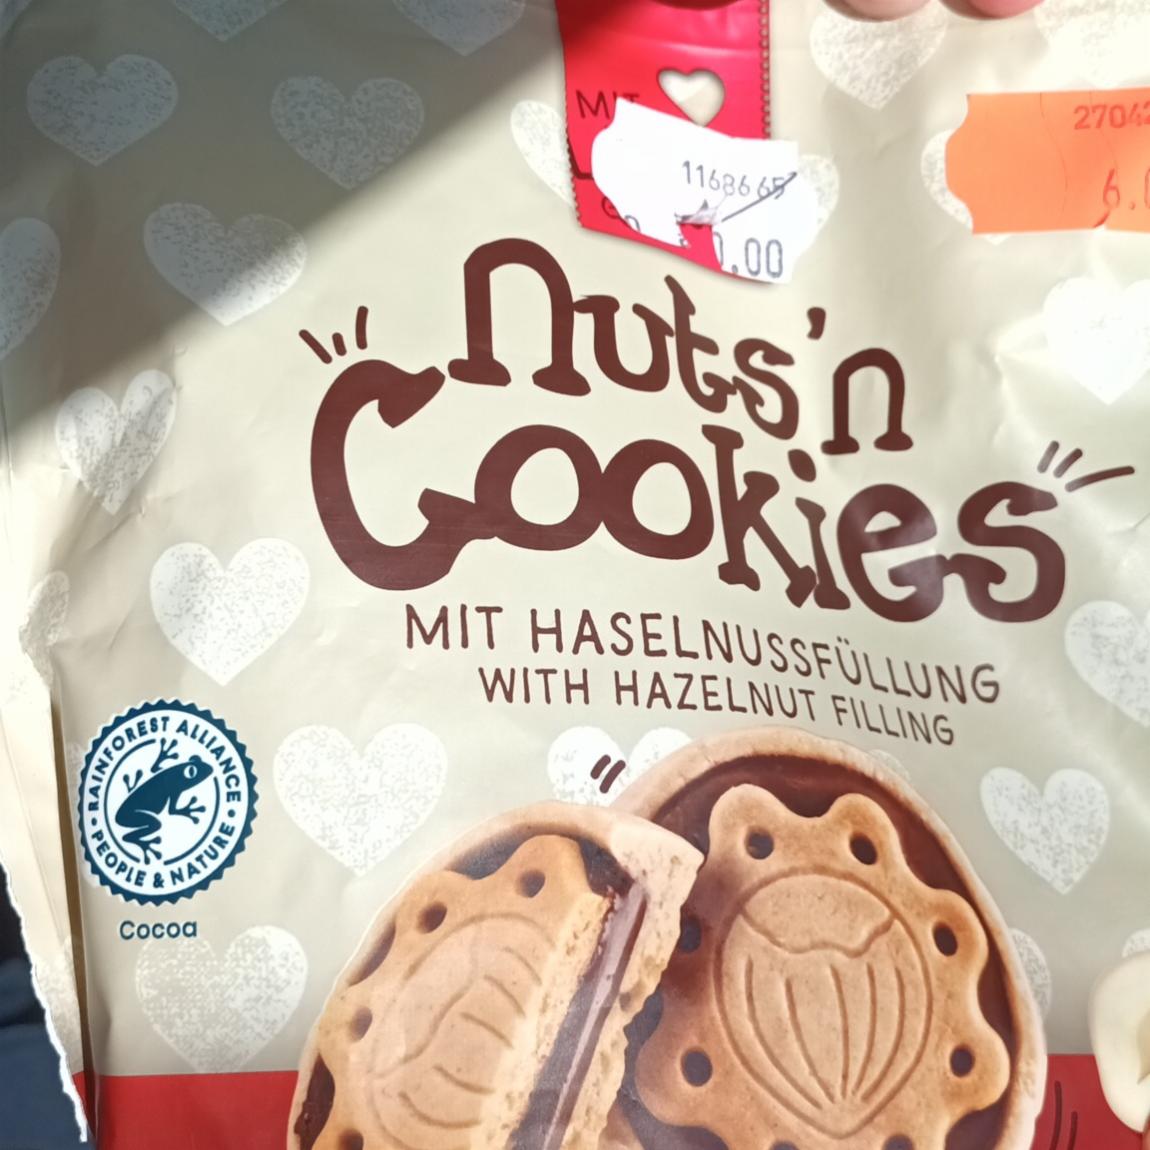 Zdjęcia - Nuts'n cookies mít haselnussfullung Mit Liebe gebacken